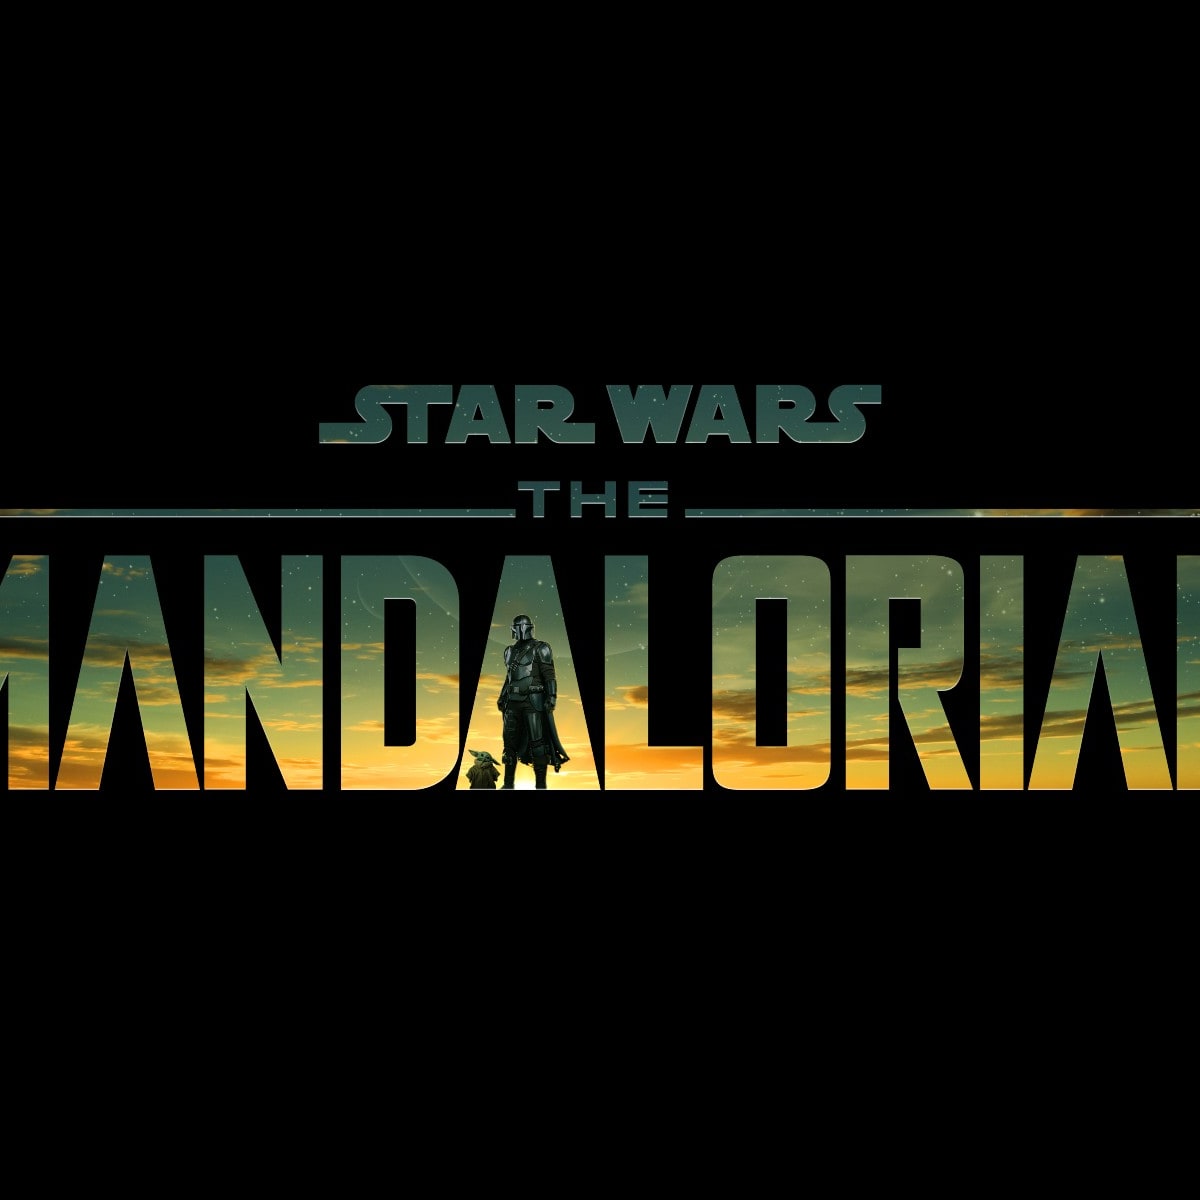 The Mandalorian season 3: release date, trailer, cast, plot, and more